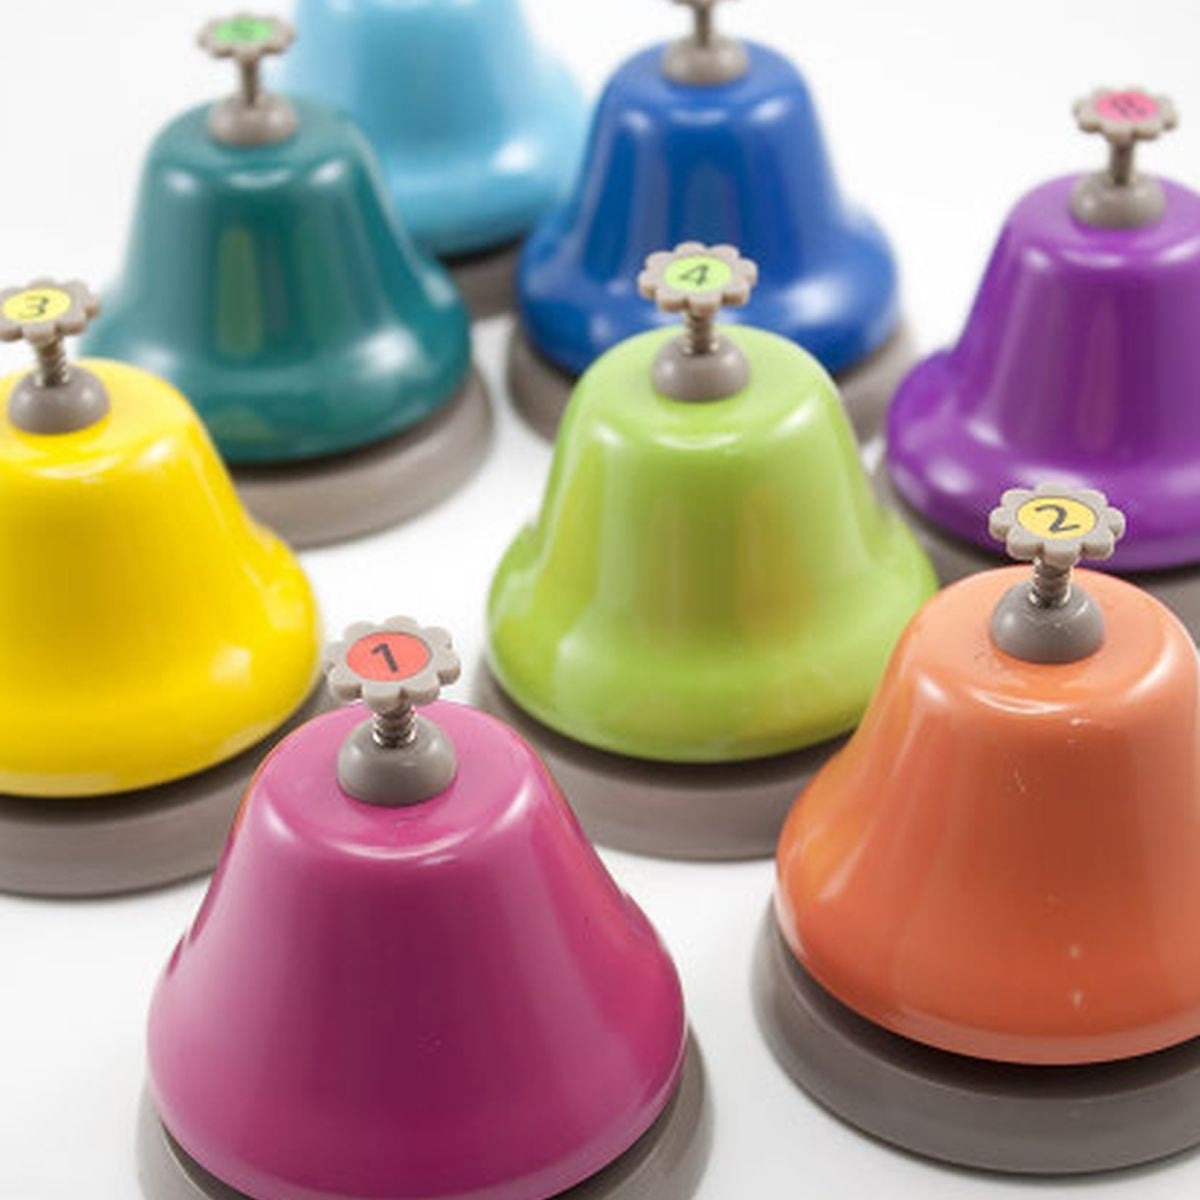 Artiwood - Rainbow Desk Bells